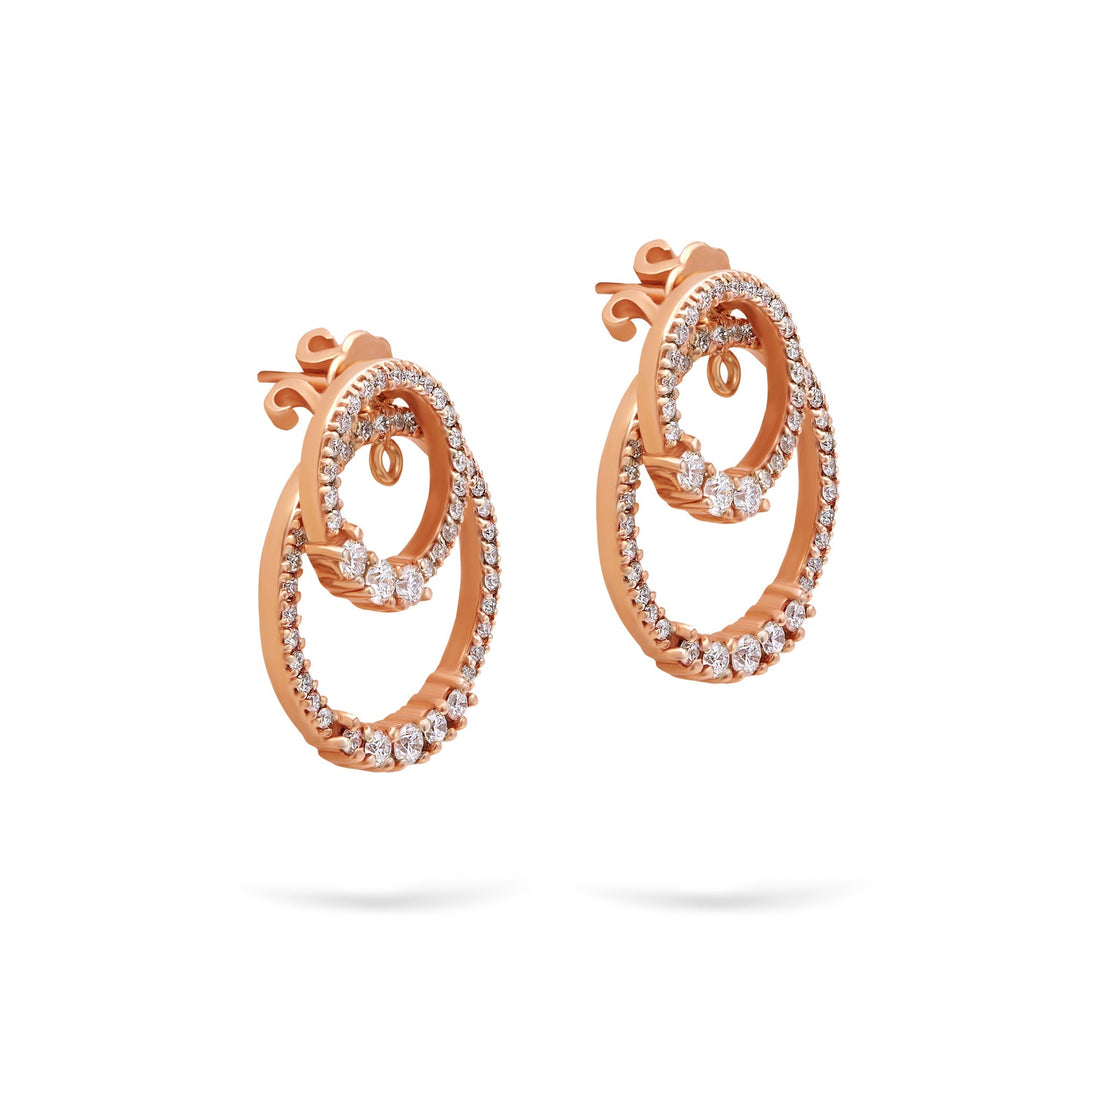 Gilda Jewelry Circles | Diamond Earrings | 0.96 Cts. | 14K Gold - Rose / Pair / Diamonds - earring Zengoda Shop online